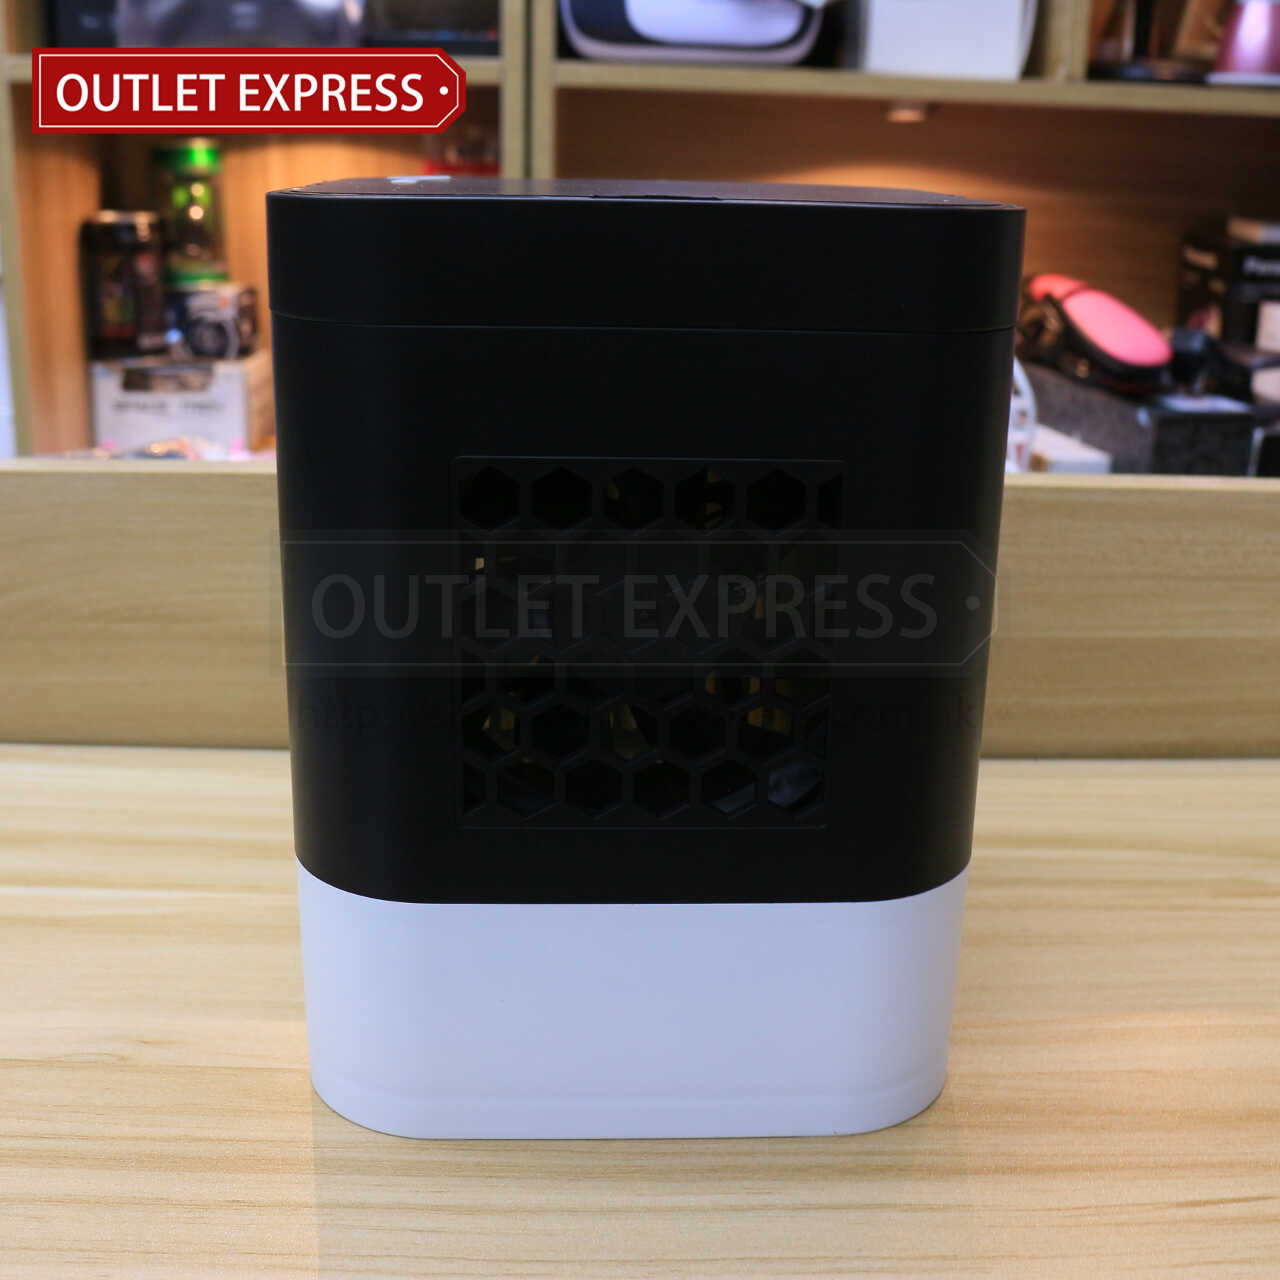 IDI USB 納米攜帶冷風機 背面- Outlet Express HK生活百貨城實拍相片